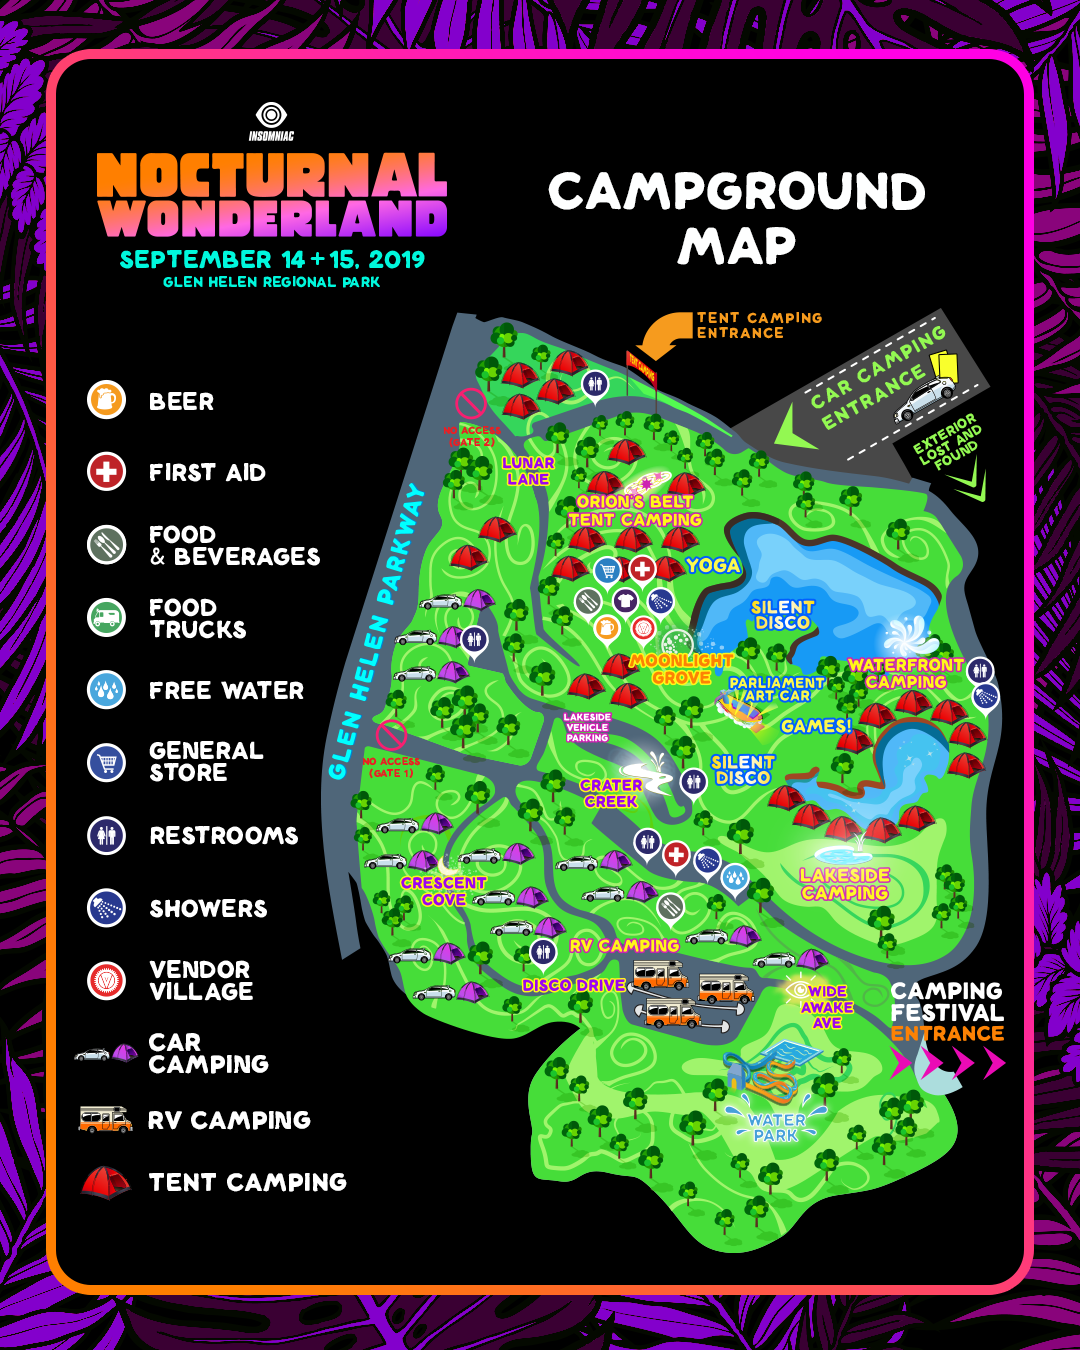 Nocturnal Wonderland 2019 Camping Map: